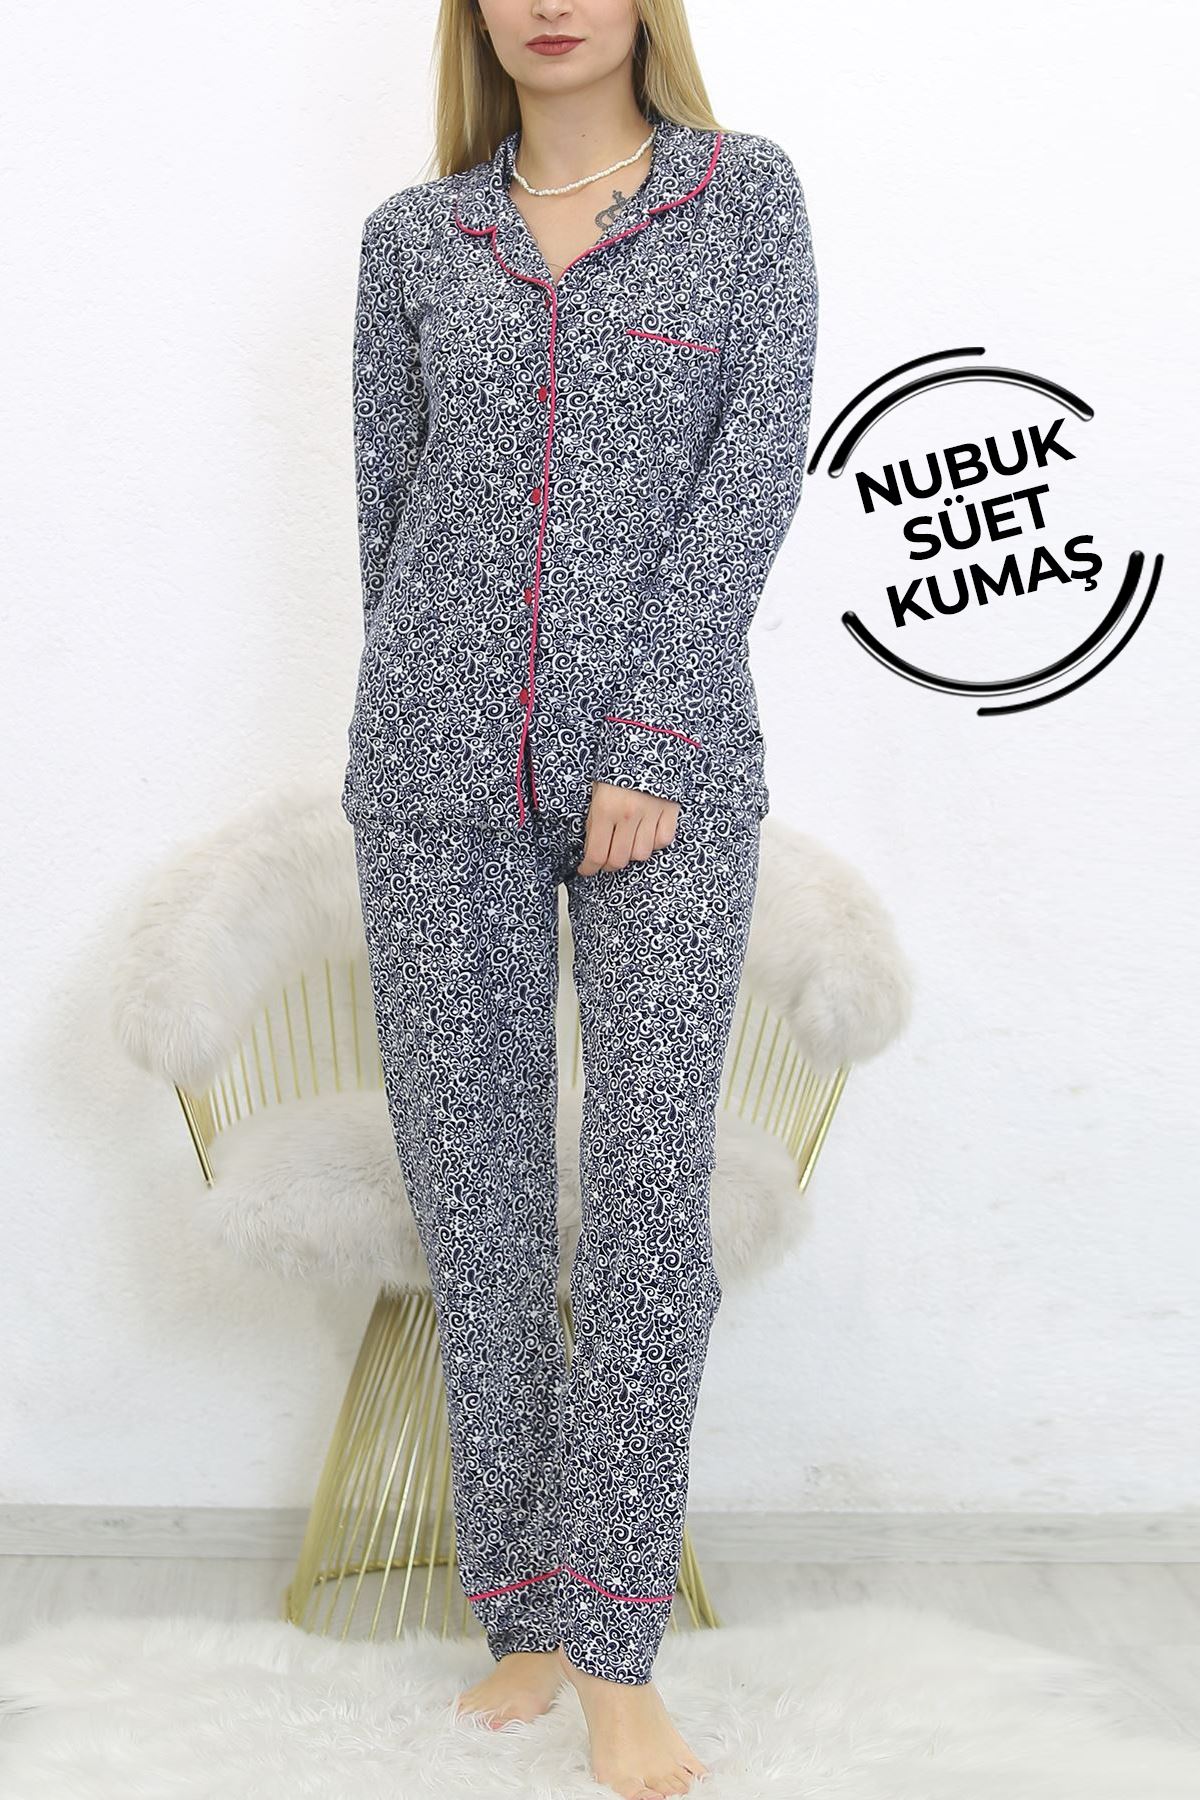 Nubuk Süet Pijama Takımı Lacifuşya3 - 8529.1048.